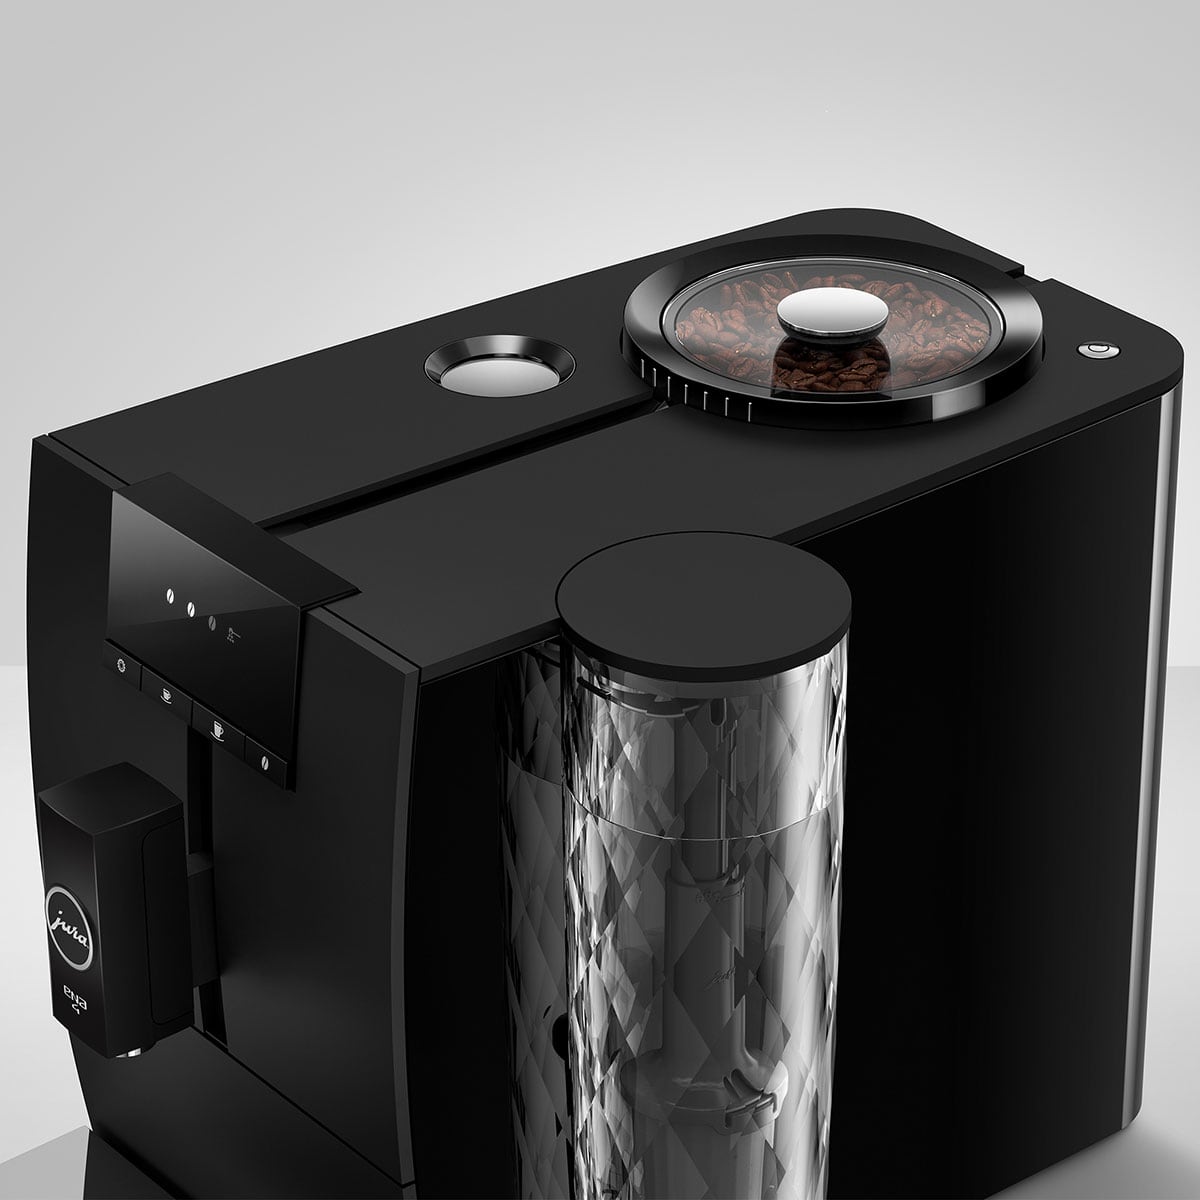 JURA ENA 4 Fully Automatic Espresso Machine